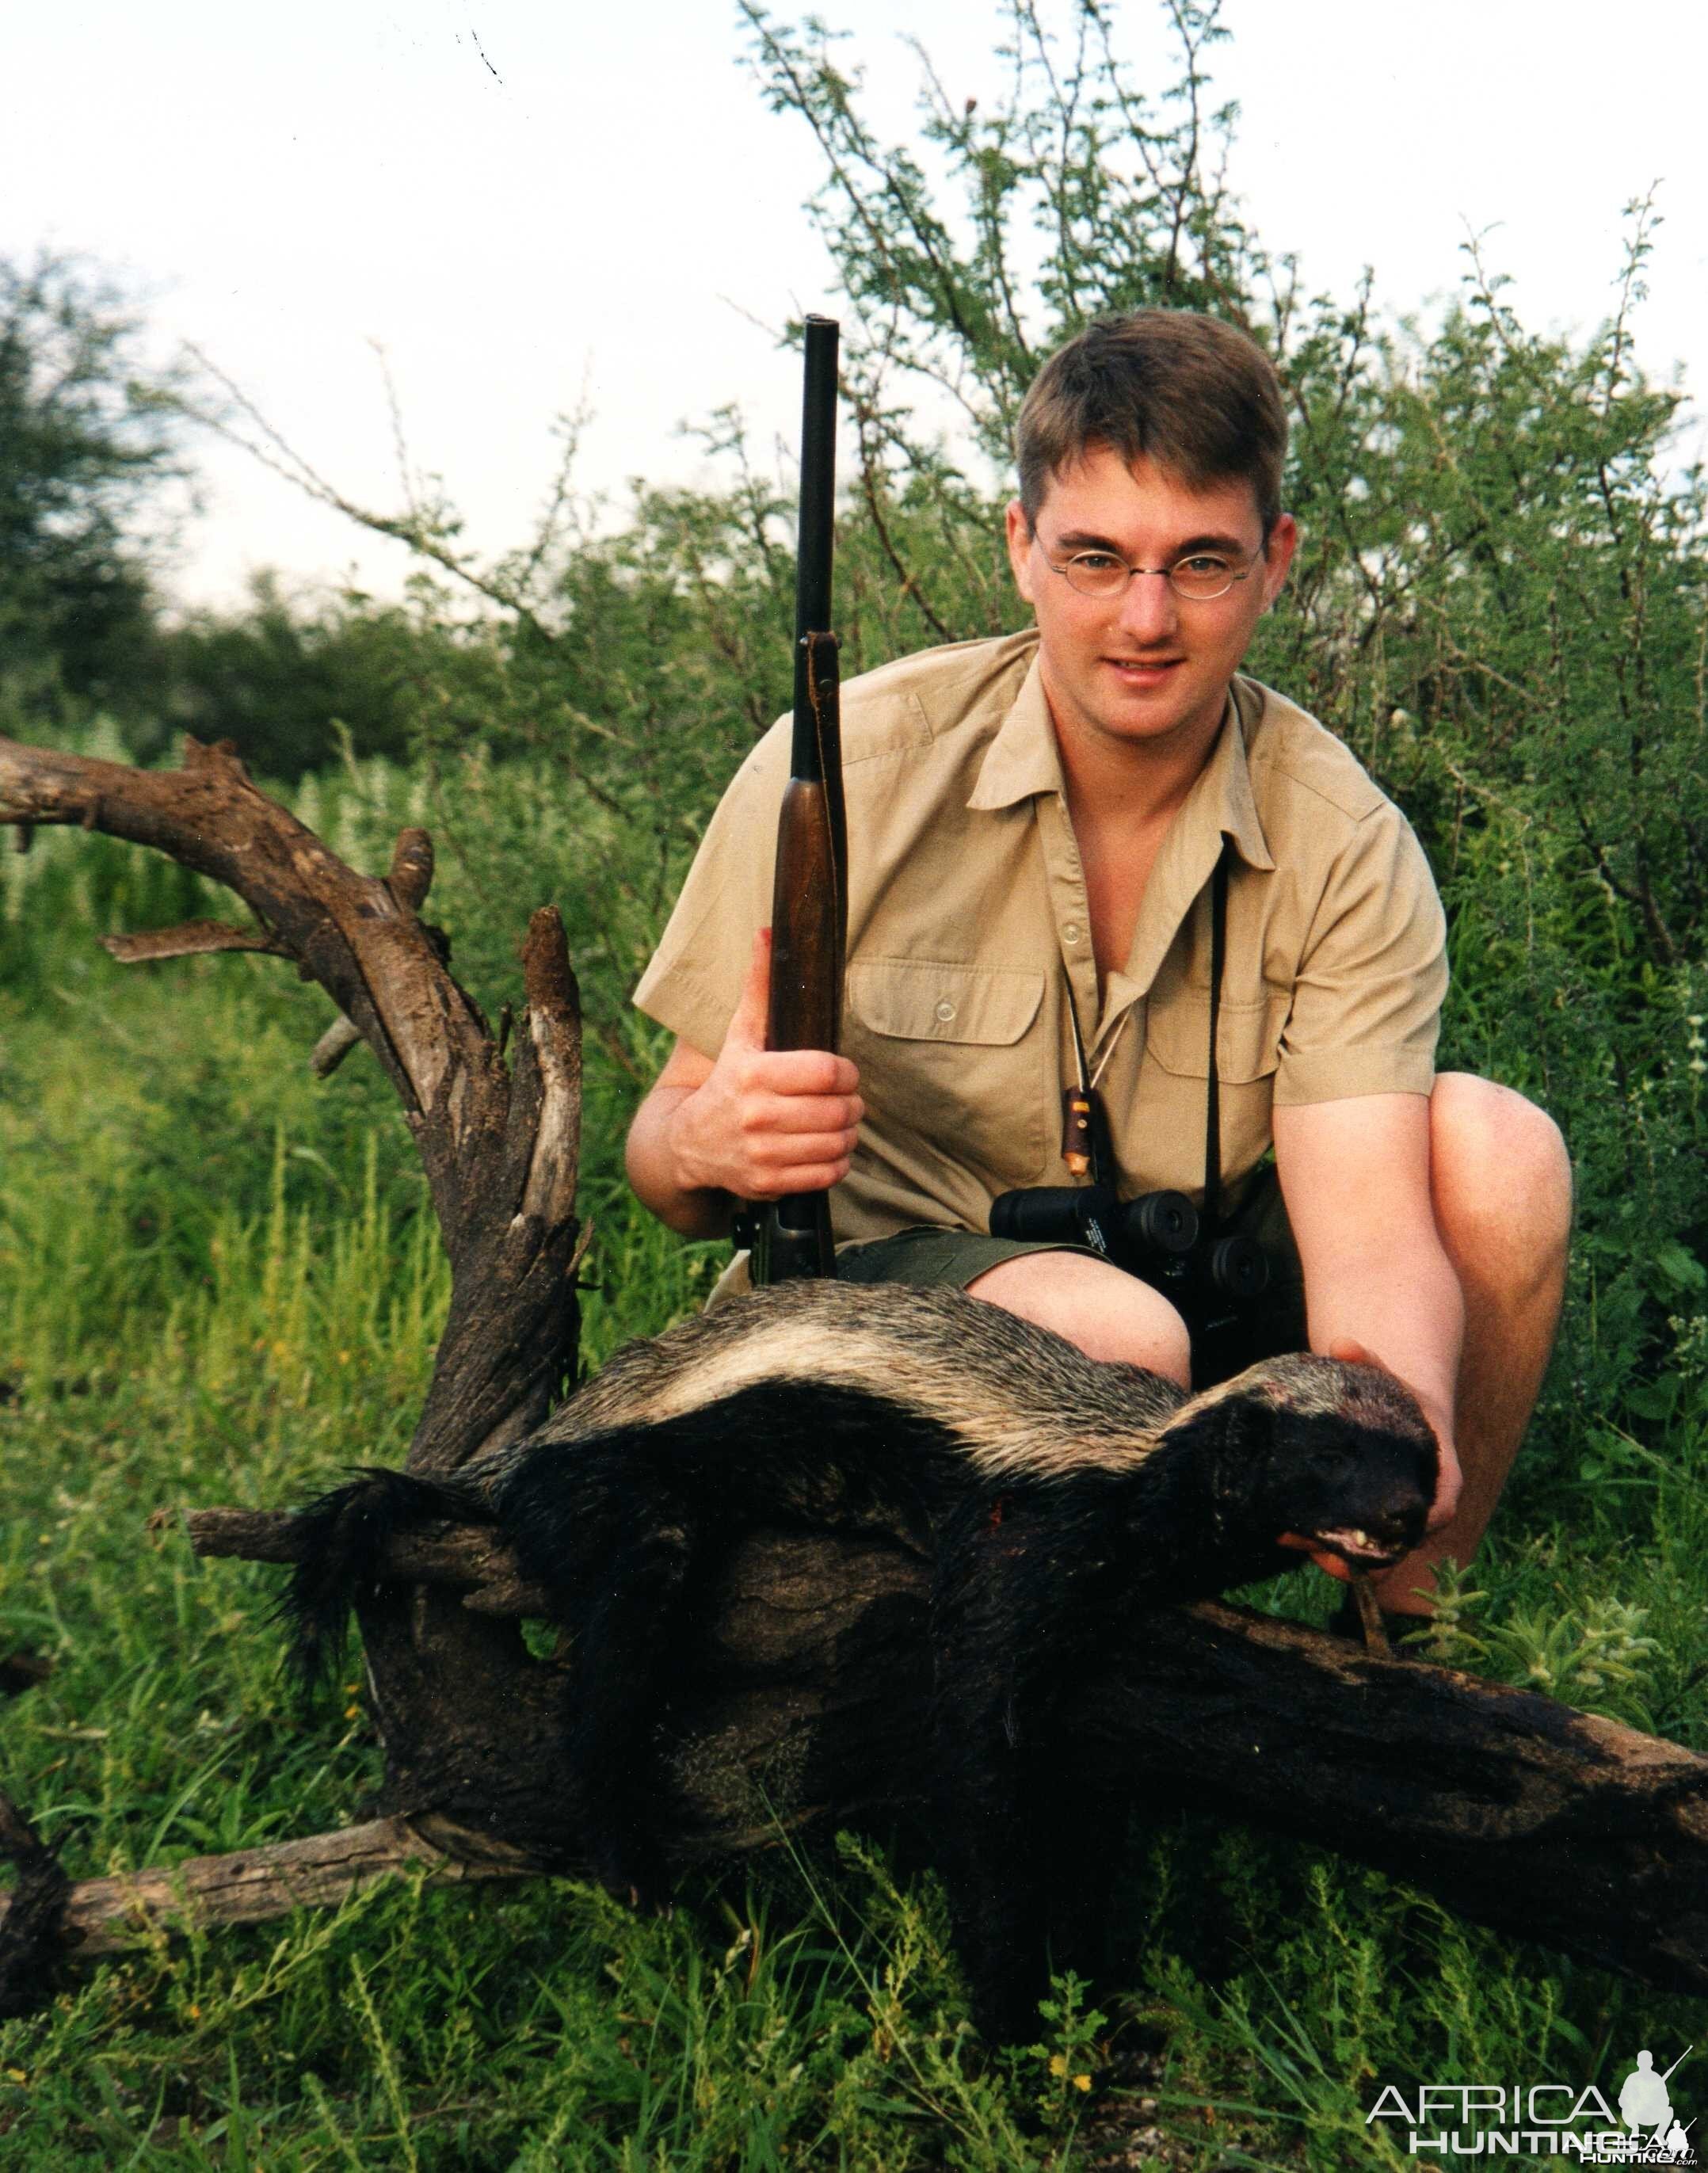 Honey badger, Namibia 2004